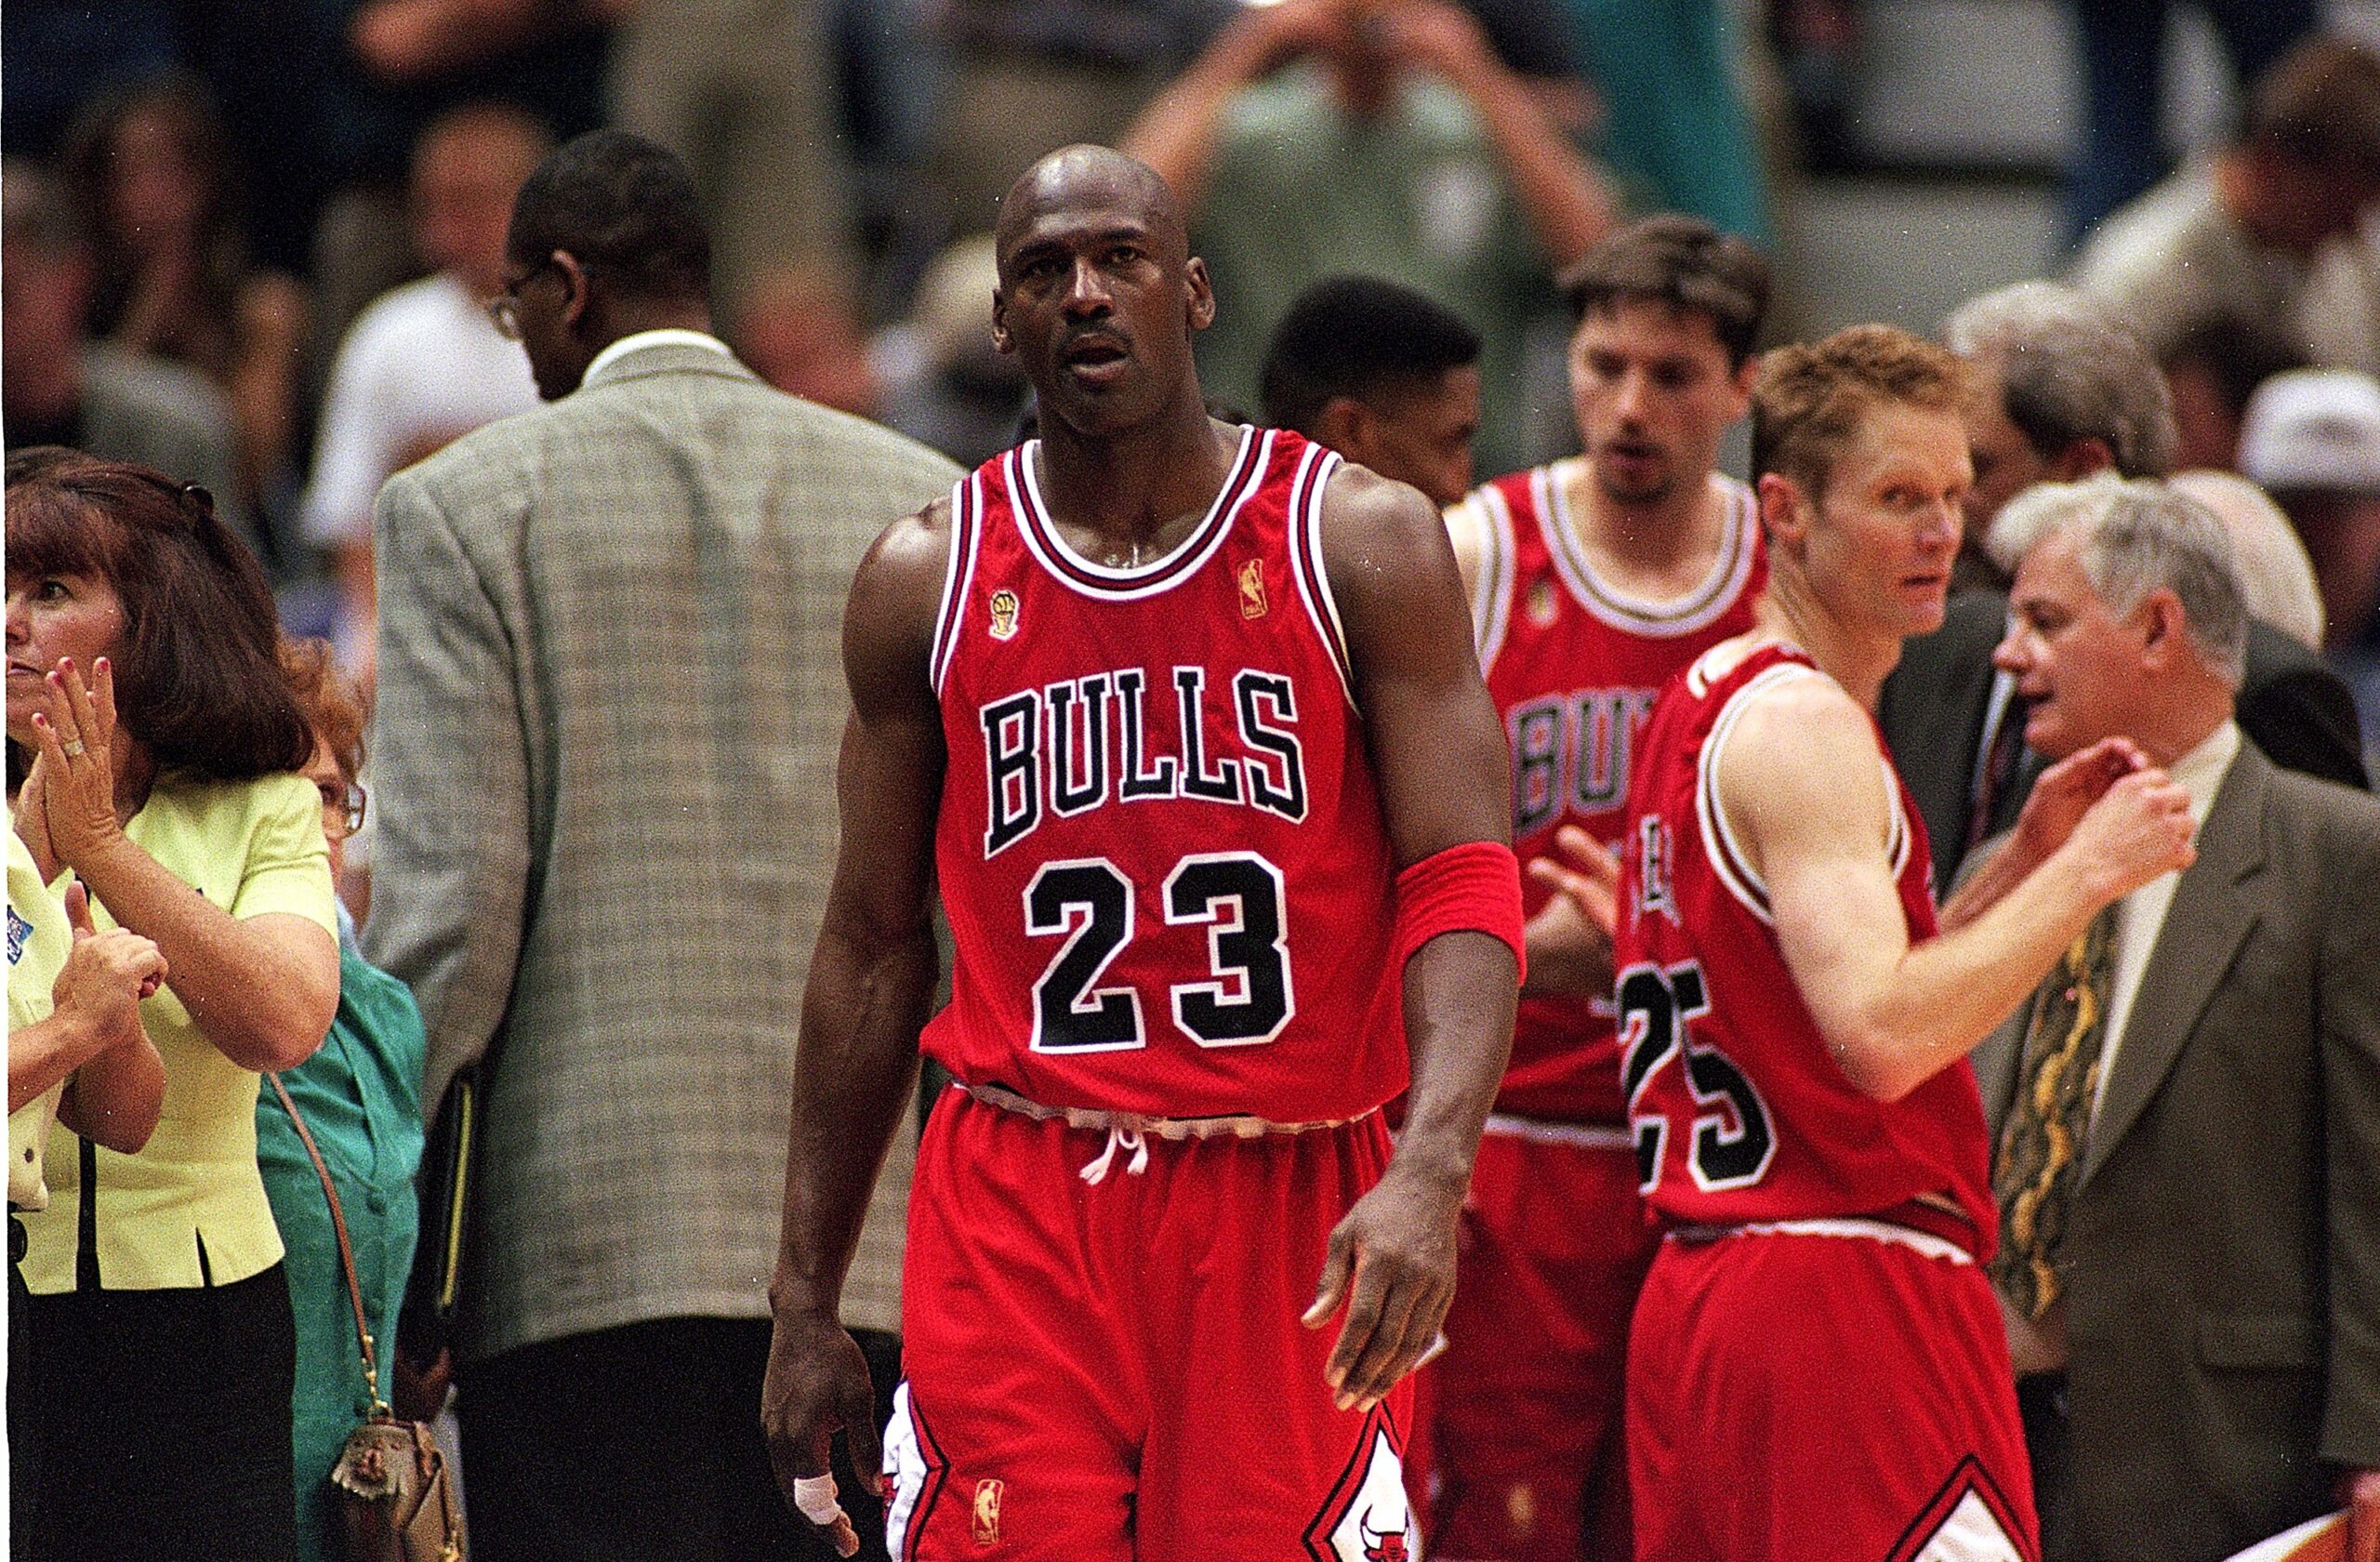 Michael Jordan of the Chicago Bulls